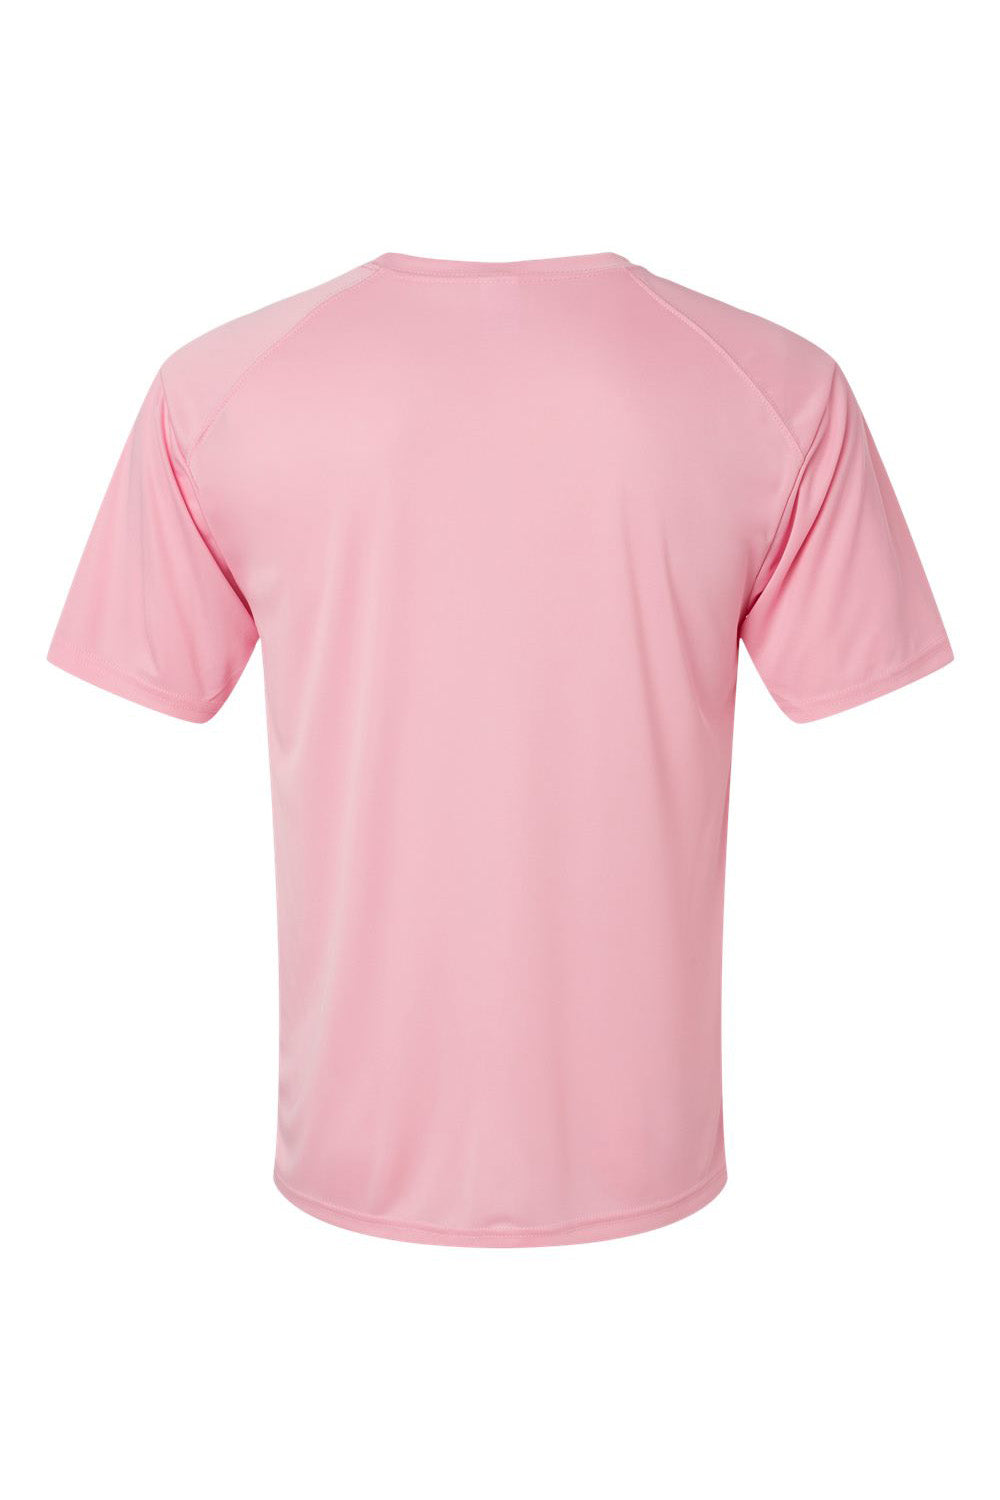 Paragon 200 Mens Islander Performance Short Sleeve Crewneck T-Shirt Charity Pink Flat Back